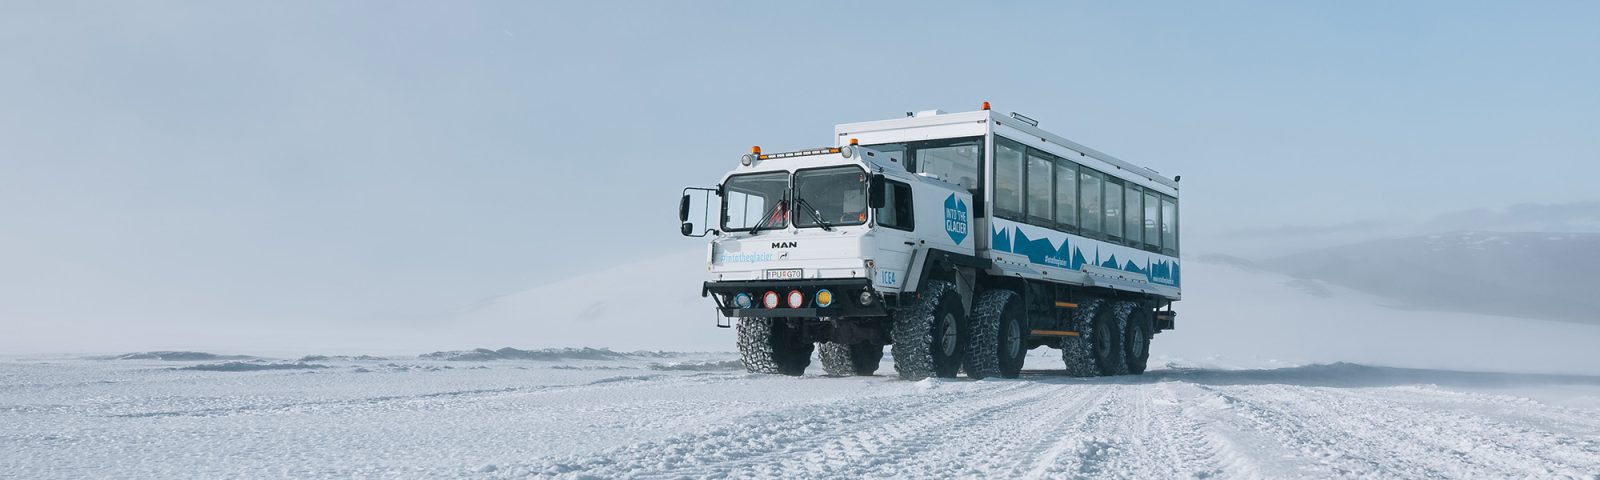 Monster-truck-on-glacier-in-Iceland